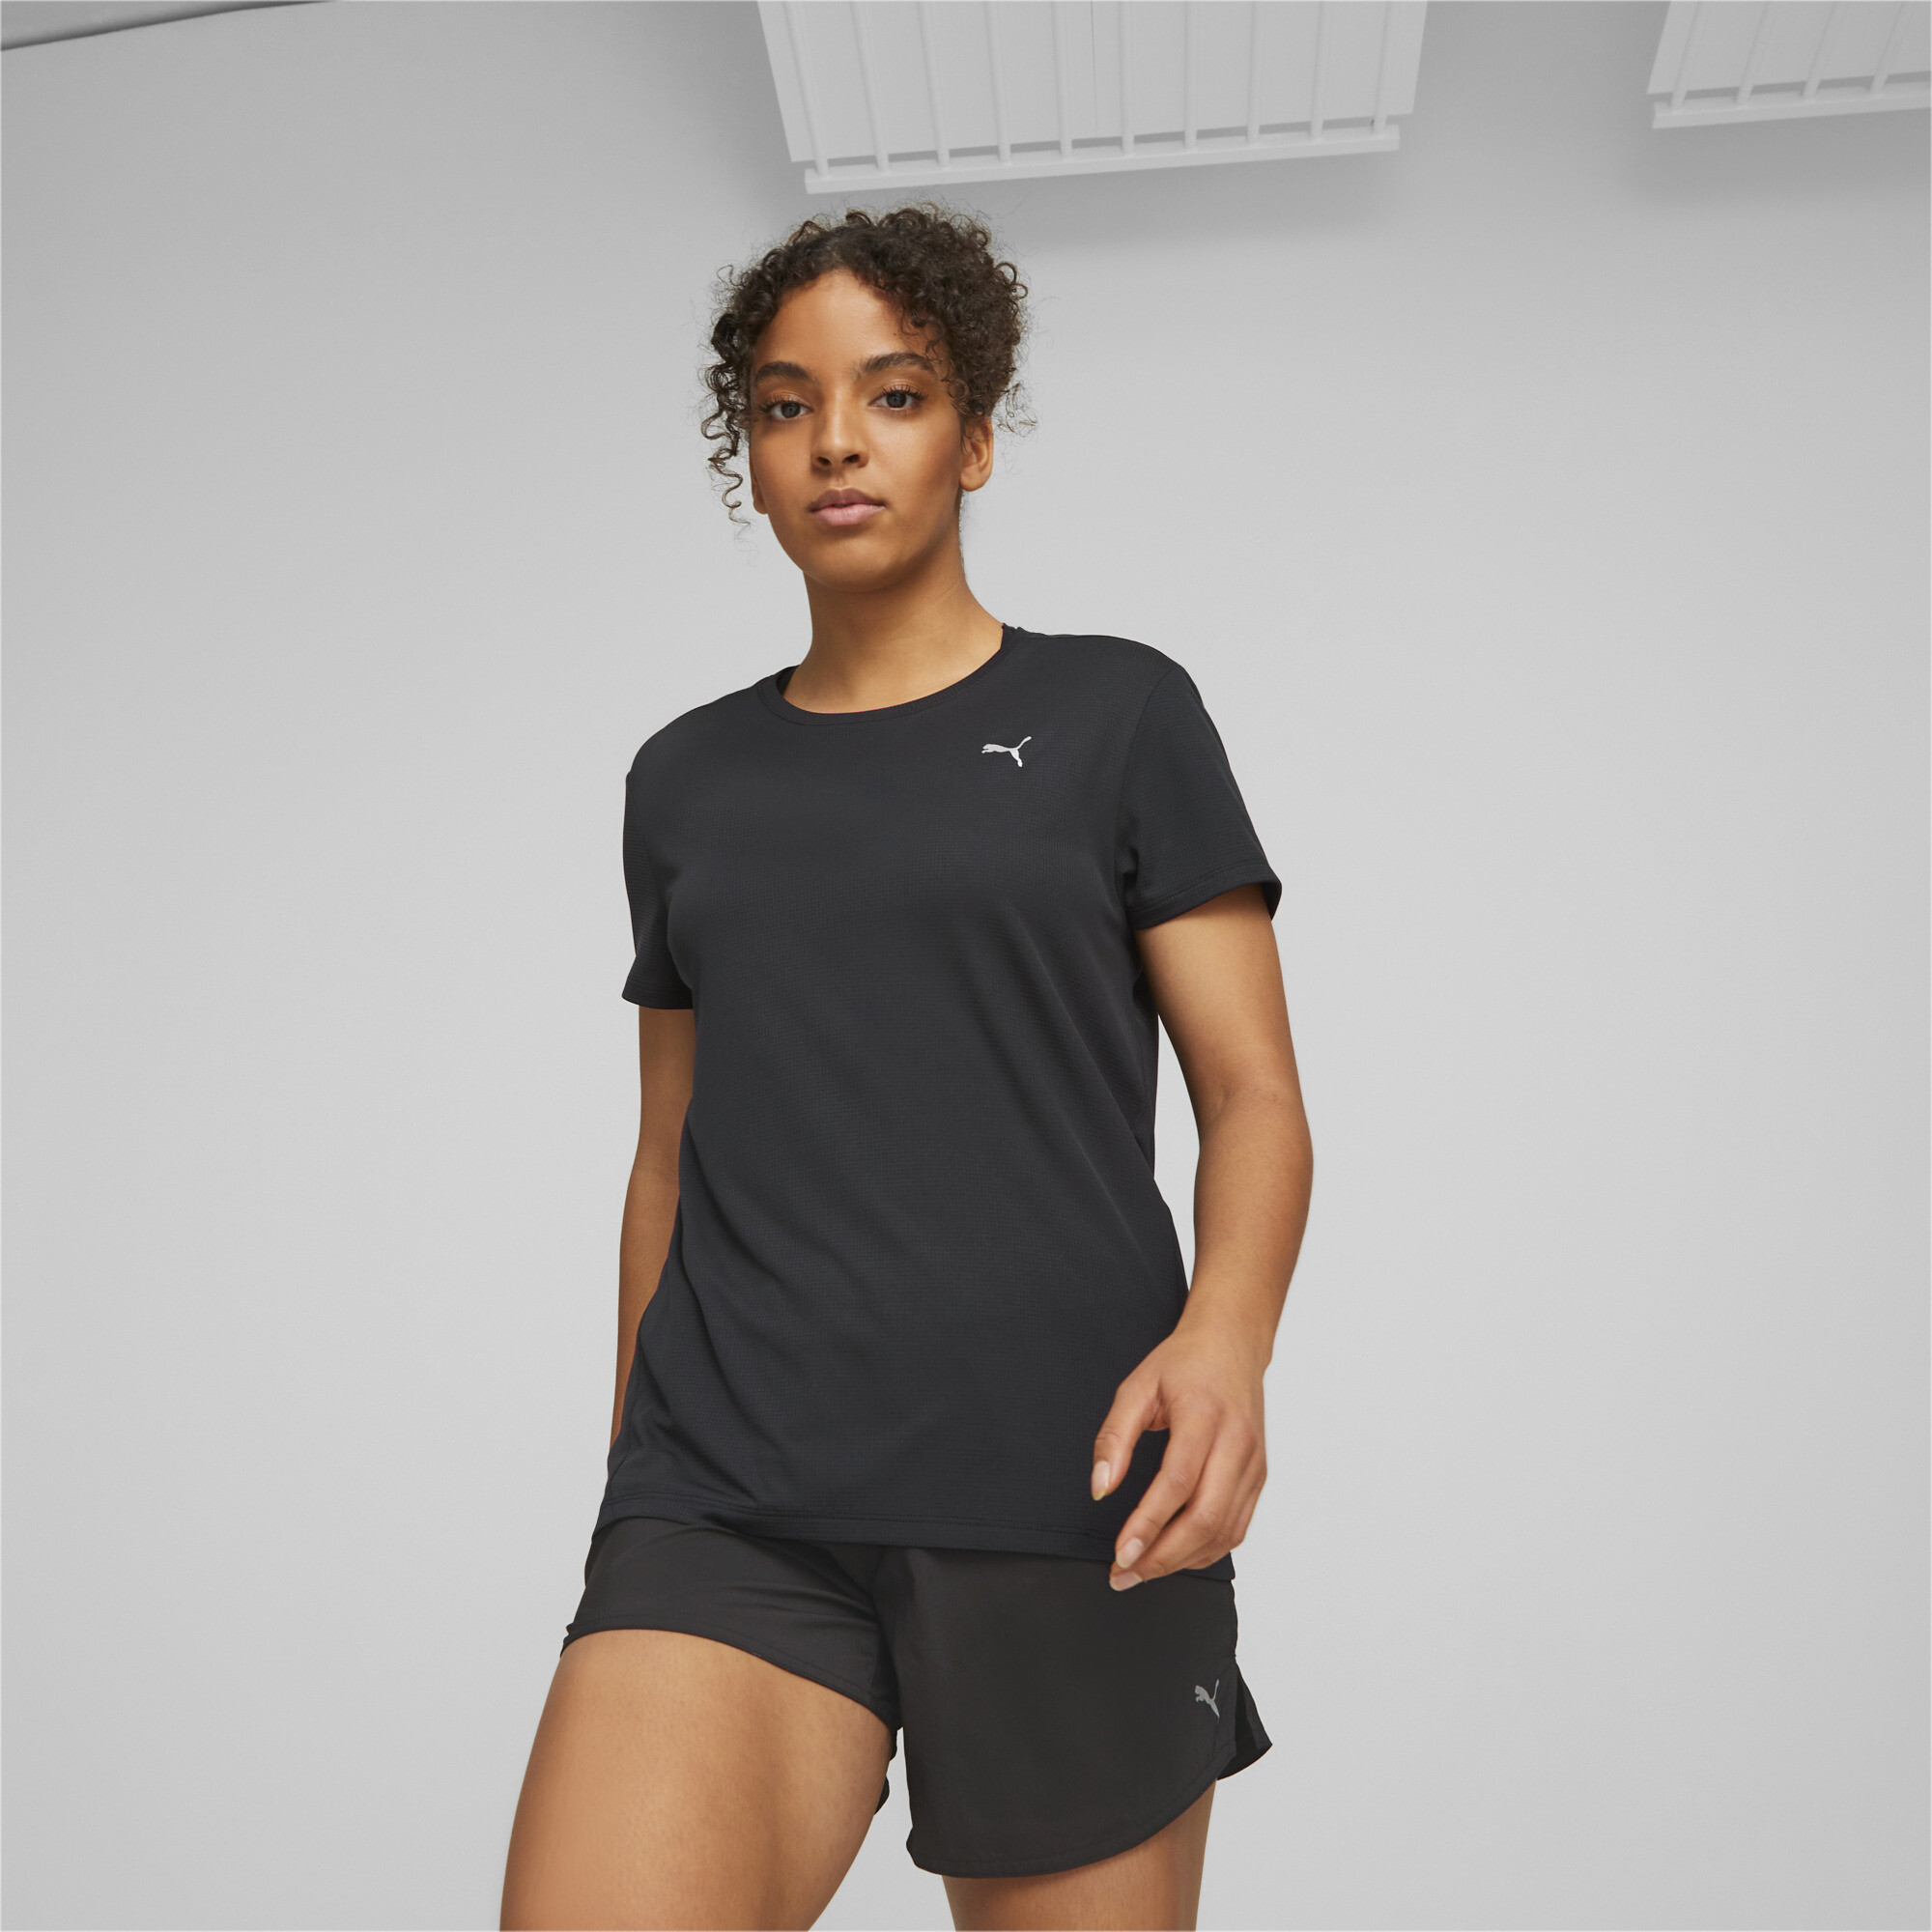 Women's Run Short Sleeve T-Shirt - All in Motion Black L - Miazone